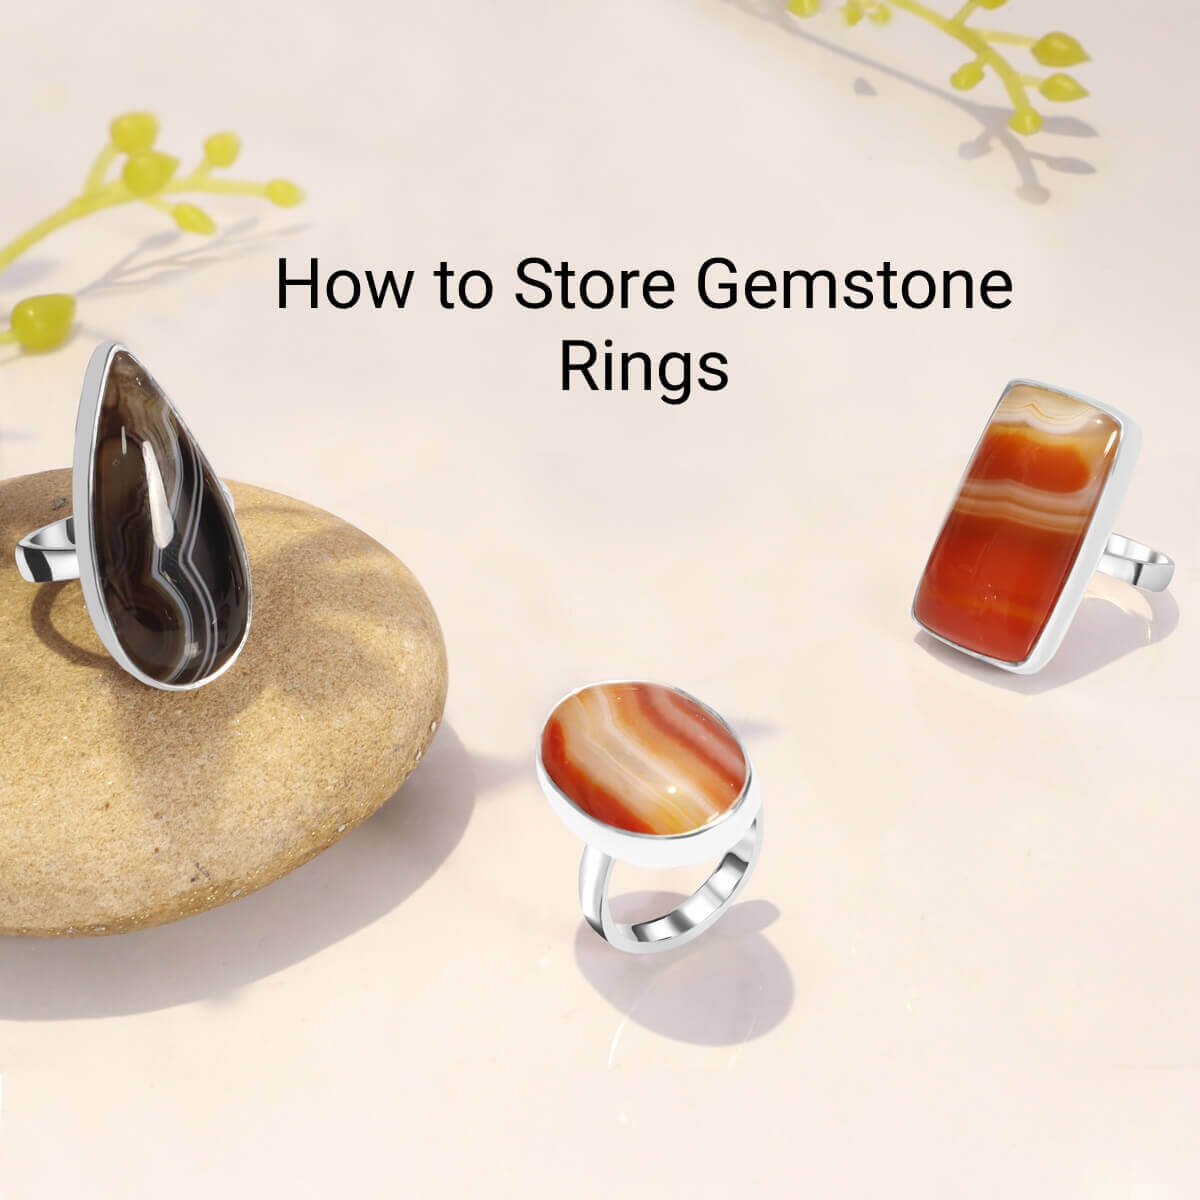 Storing Your Gemstone Rings